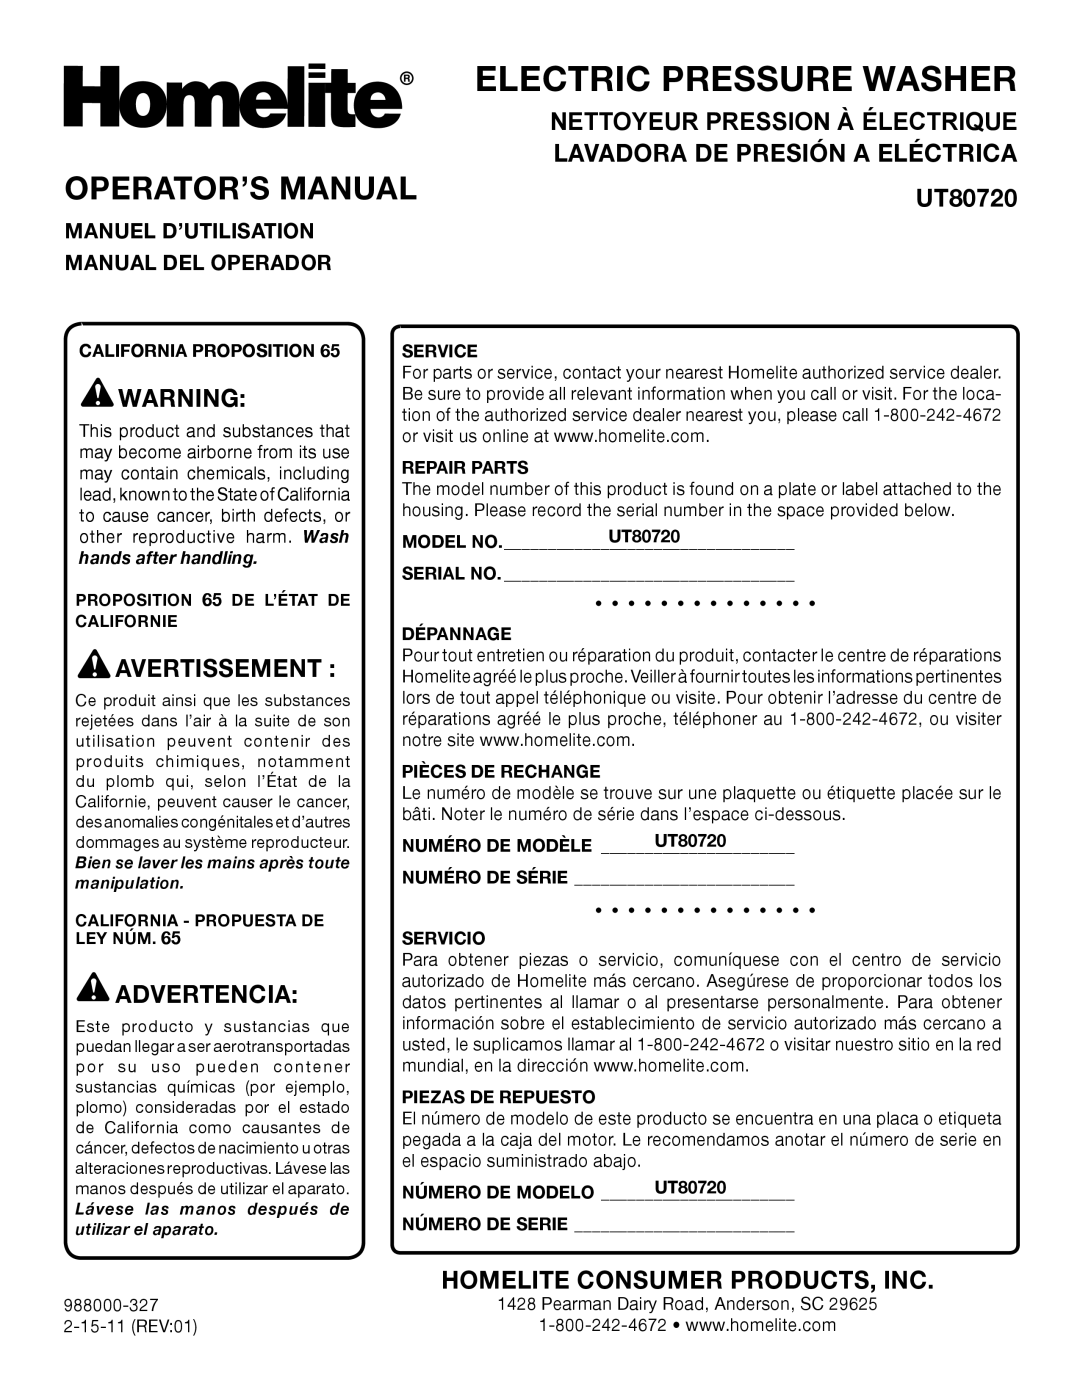 Homelite UT80720 Operator’S Manual, Avertissement , Advertencia, Homelite Consumer Products, Inc, Electric Pressure Washer 